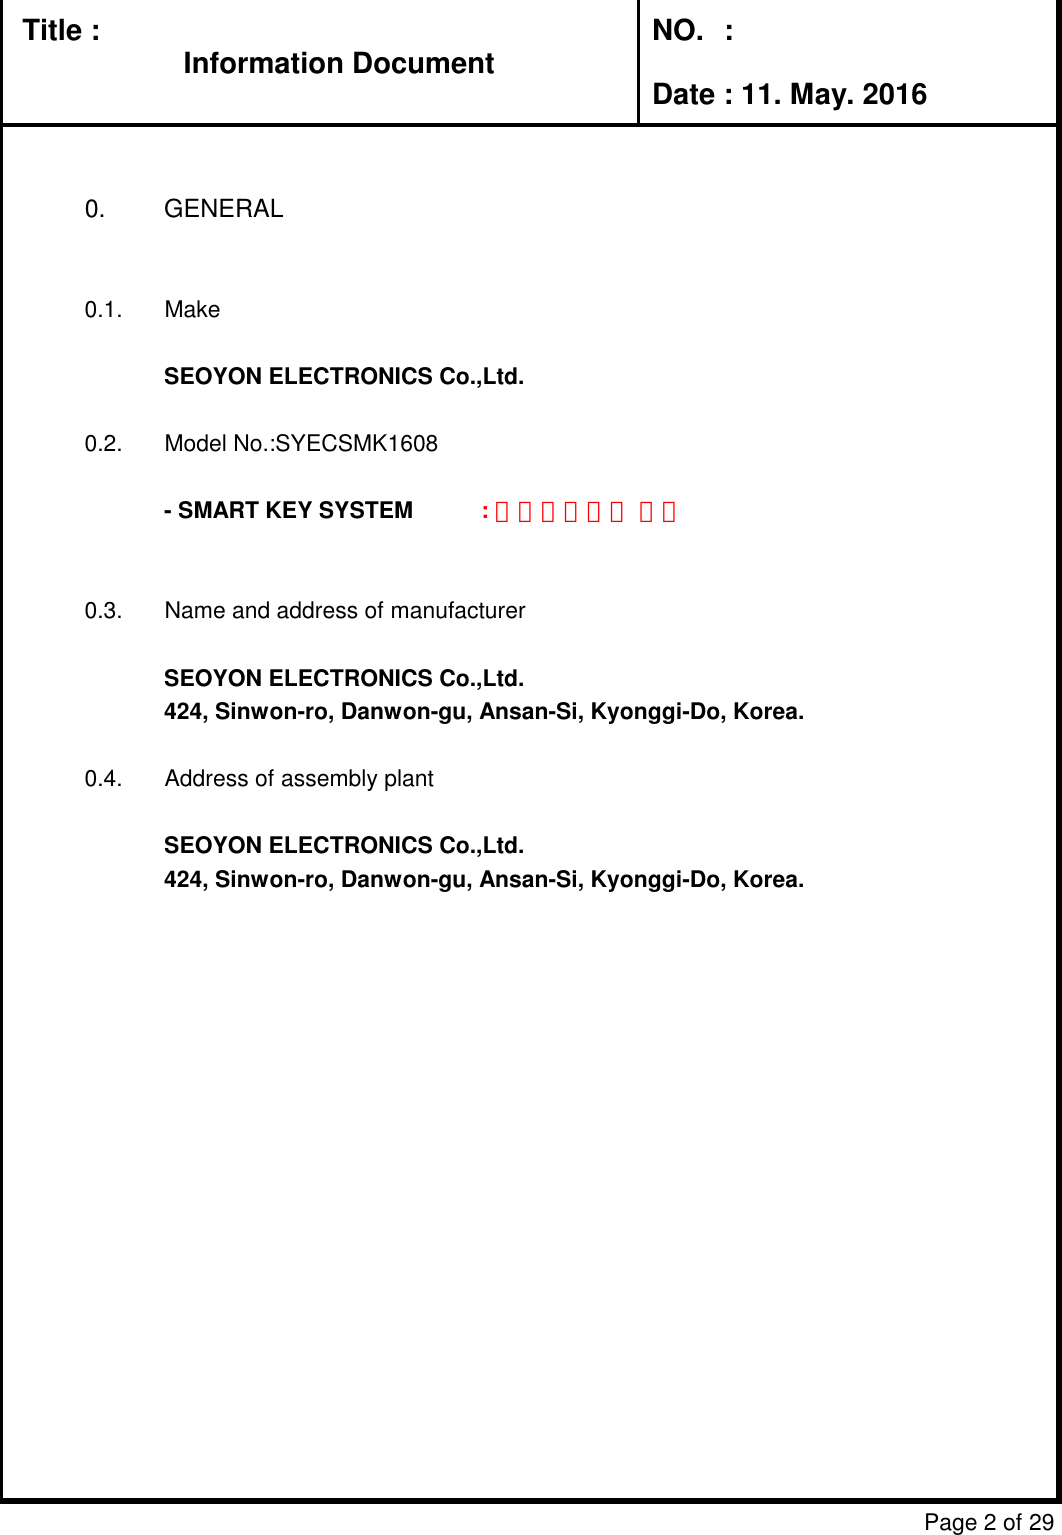 Title : Information DocumentNO.  :Date : 11. May. 20160.  GENERAL0.1.  MakeSEOYON ELECTRONICS Co.,Ltd.0.2.  Model No.:SYECSMK1608- SMART KEY SYSTEM  : 설계지원파트 작성0.3.  Name and address of manufacturerSEOYON ELECTRONICS Co.,Ltd.424, Sinwon-ro, Danwon-gu, Ansan-Si, Kyonggi-Do, Korea.0.4.  Address of assembly plantSEOYON ELECTRONICS Co.,Ltd.424, Sinwon-ro, Danwon-gu, Ansan-Si, Kyonggi-Do, Korea.Page 2 of 29